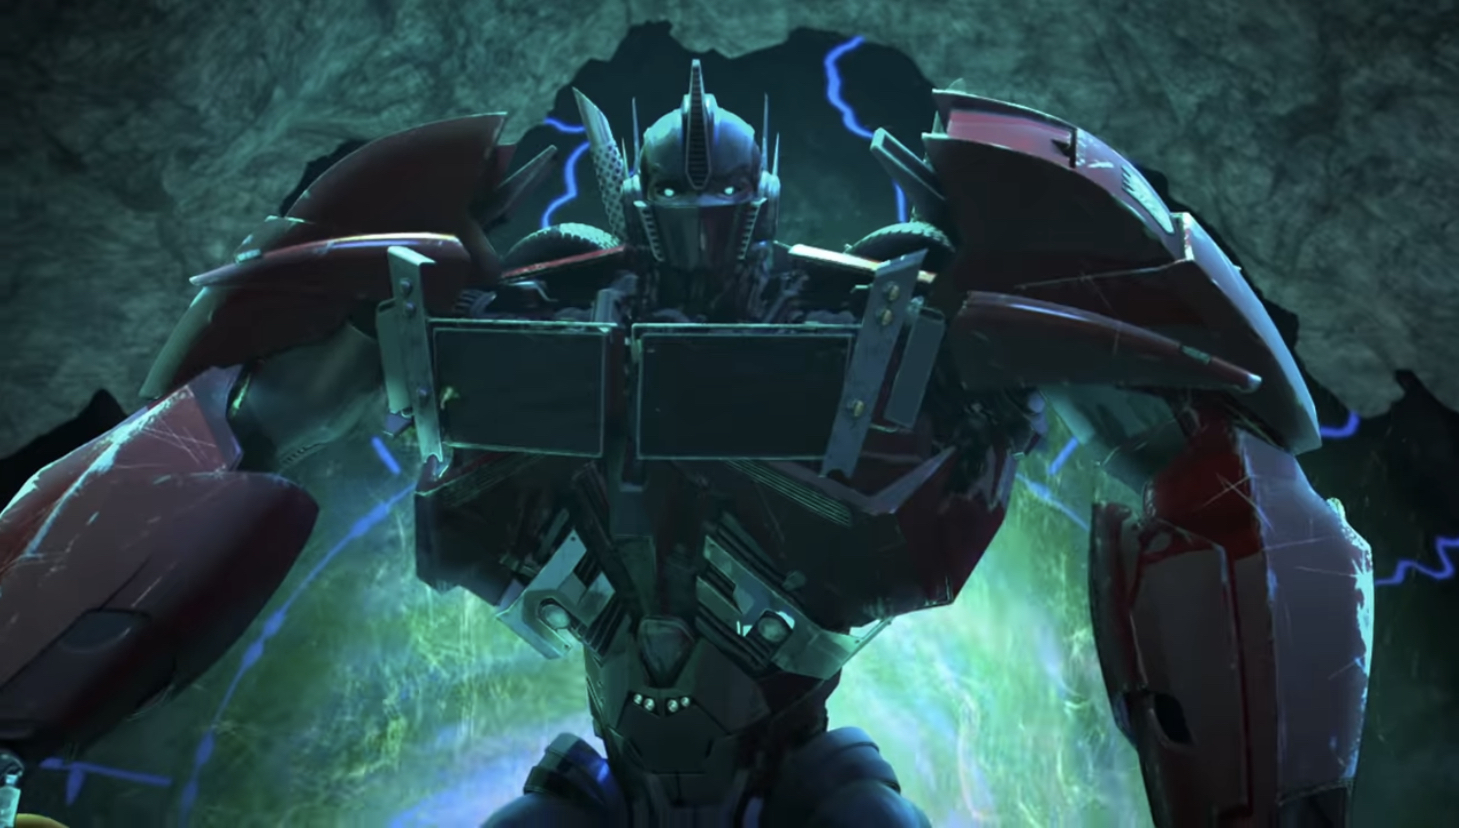 Орион ПАКС трансформеры. Orion Pax Transformers Prime. Арена Каона трансформеры. Битва трансформеров фигурки. Prime power